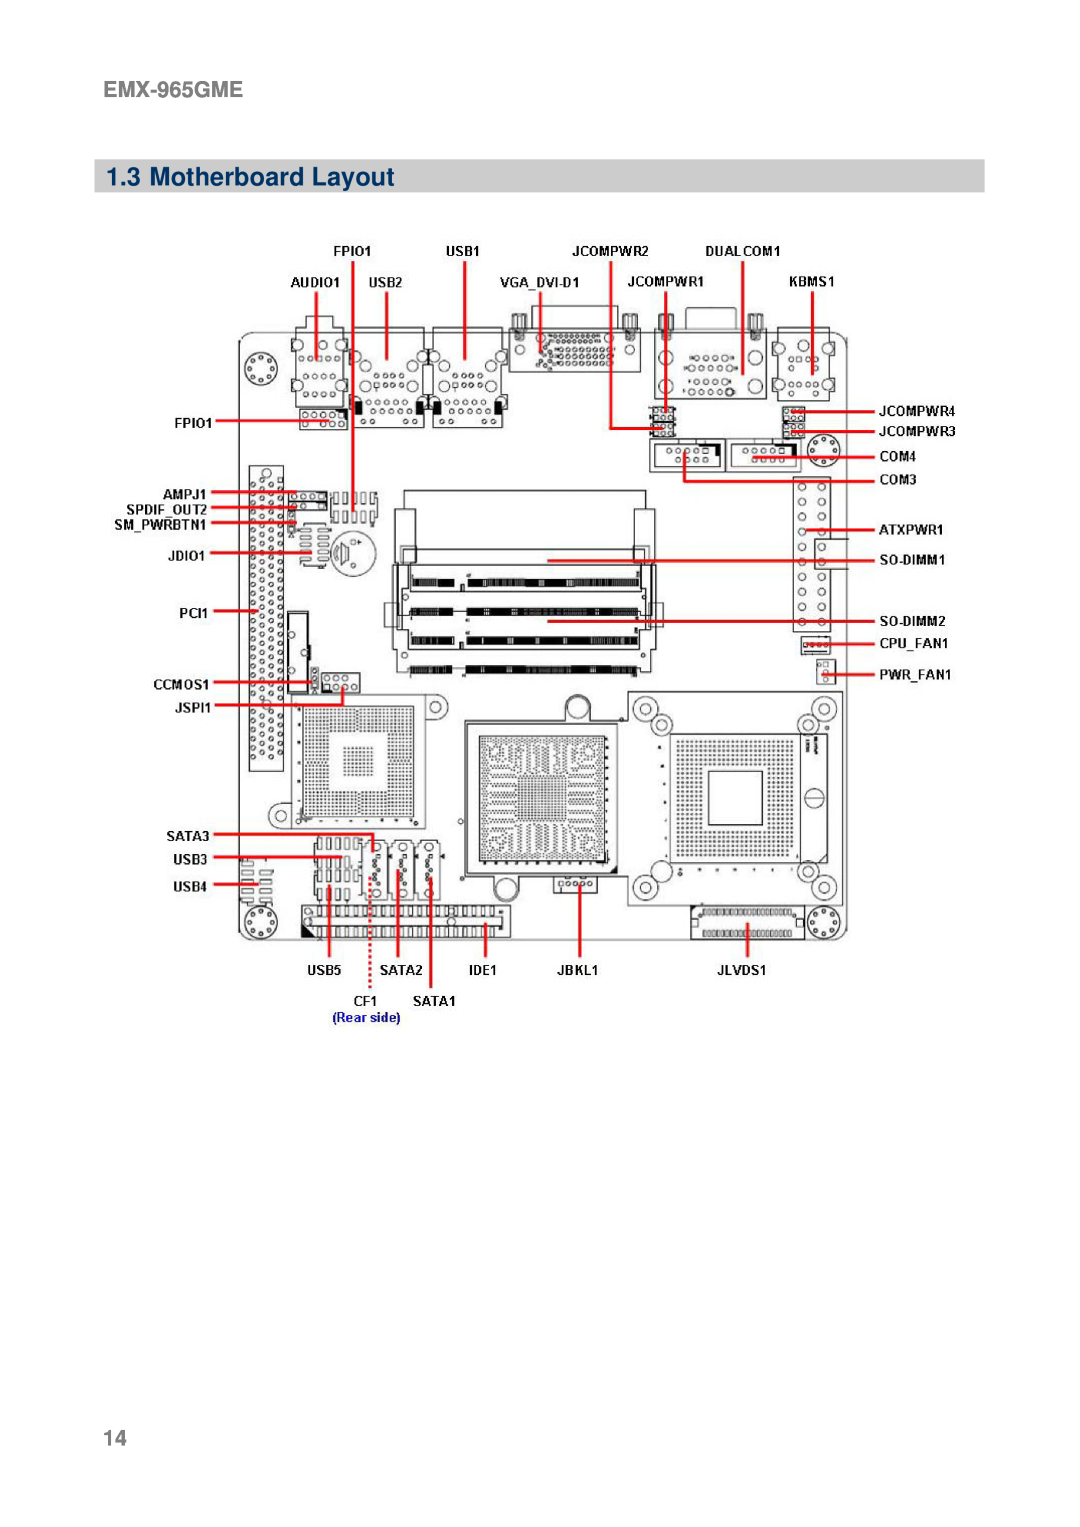 Intel EMX-965GME user manual Motherboard Layout 